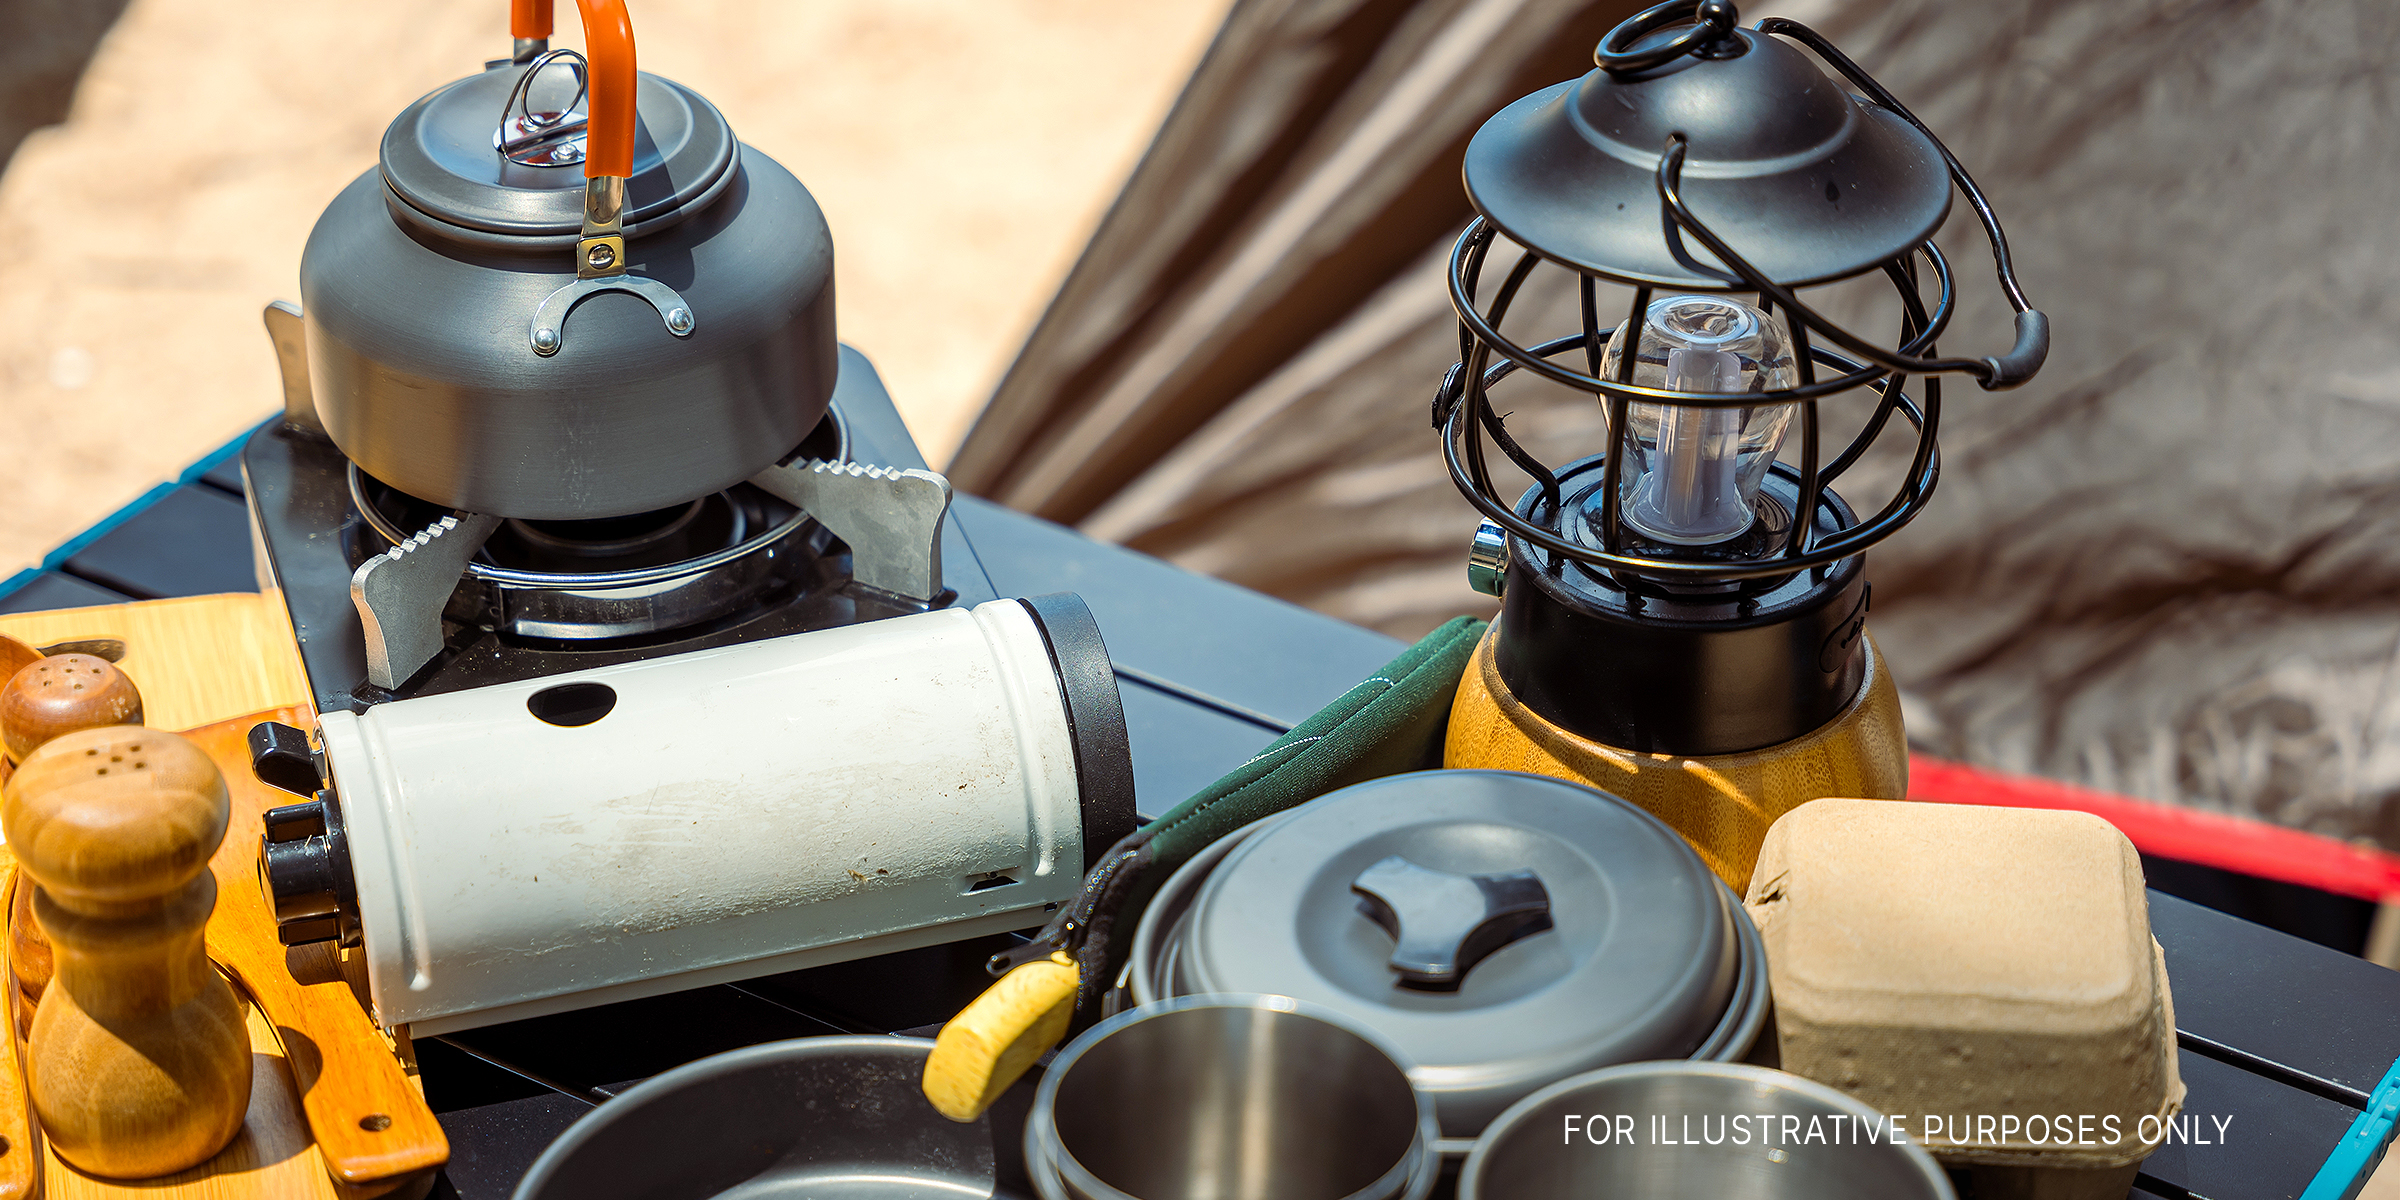 Camping essentials | Source: Shutterstock